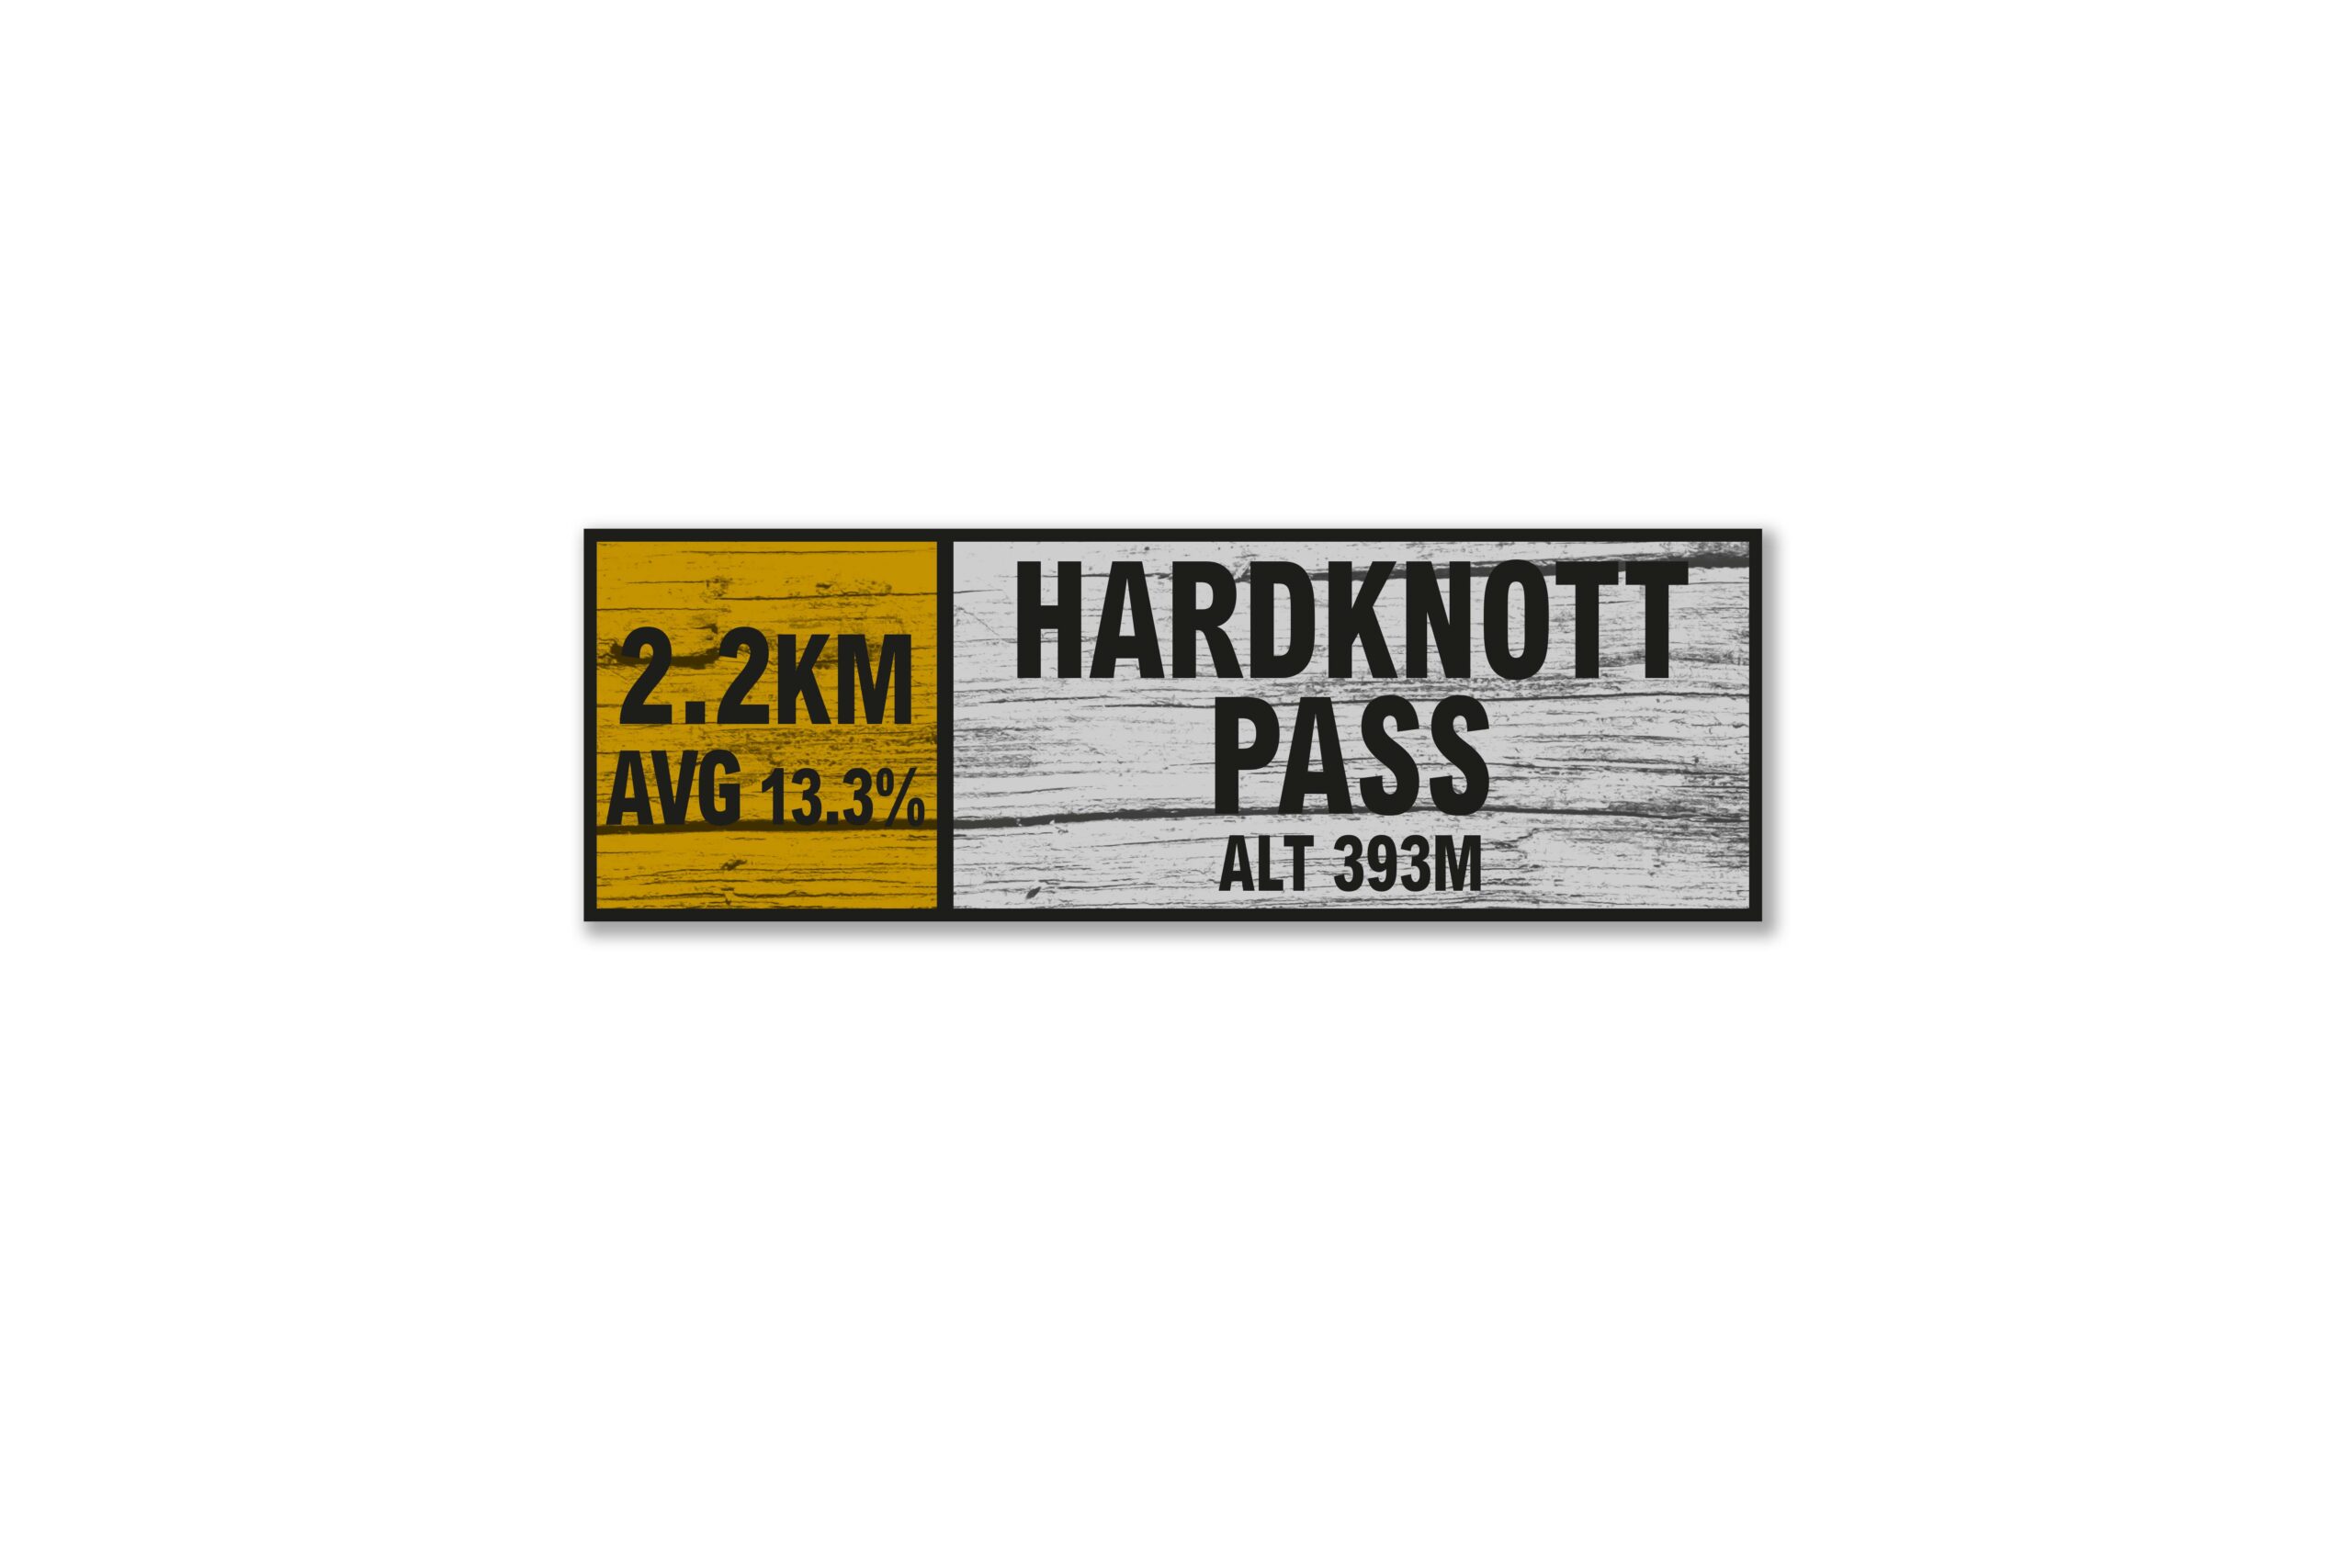 Hardknott Pass wall sign